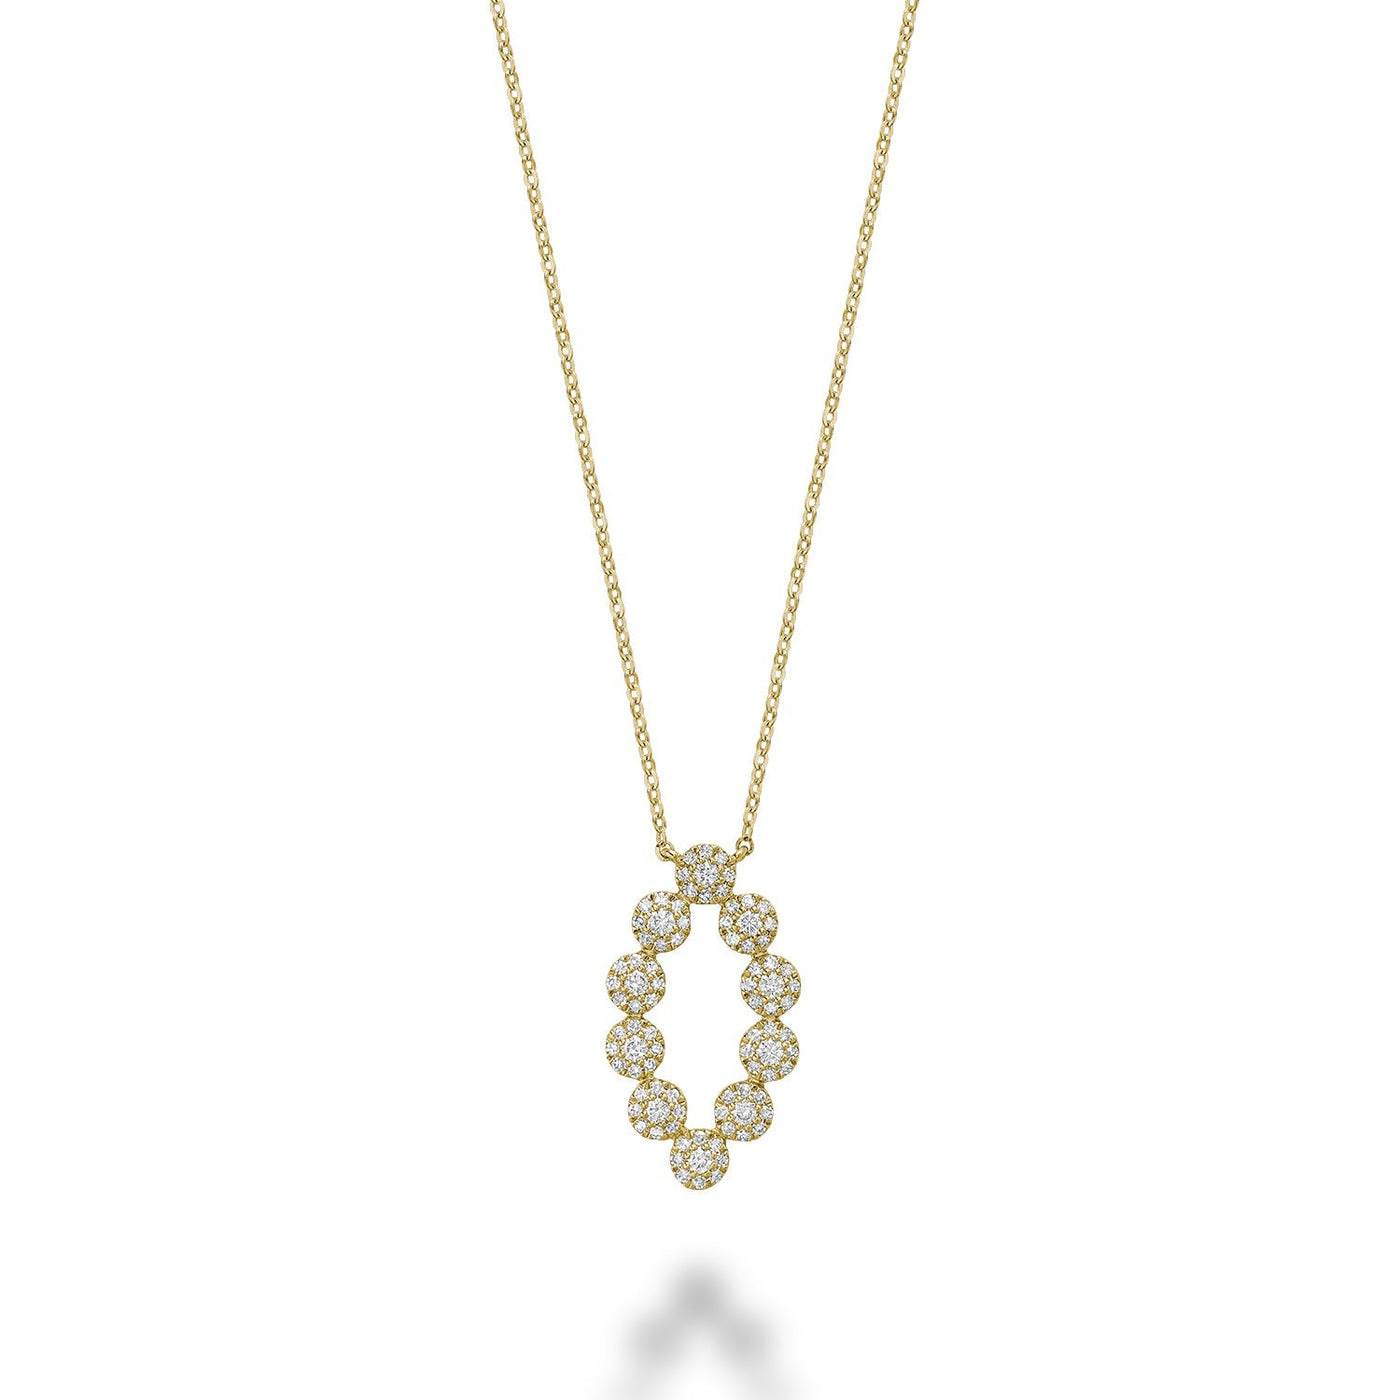 Martini Cup Fashion Diamond Necklace - RNB Jewellery